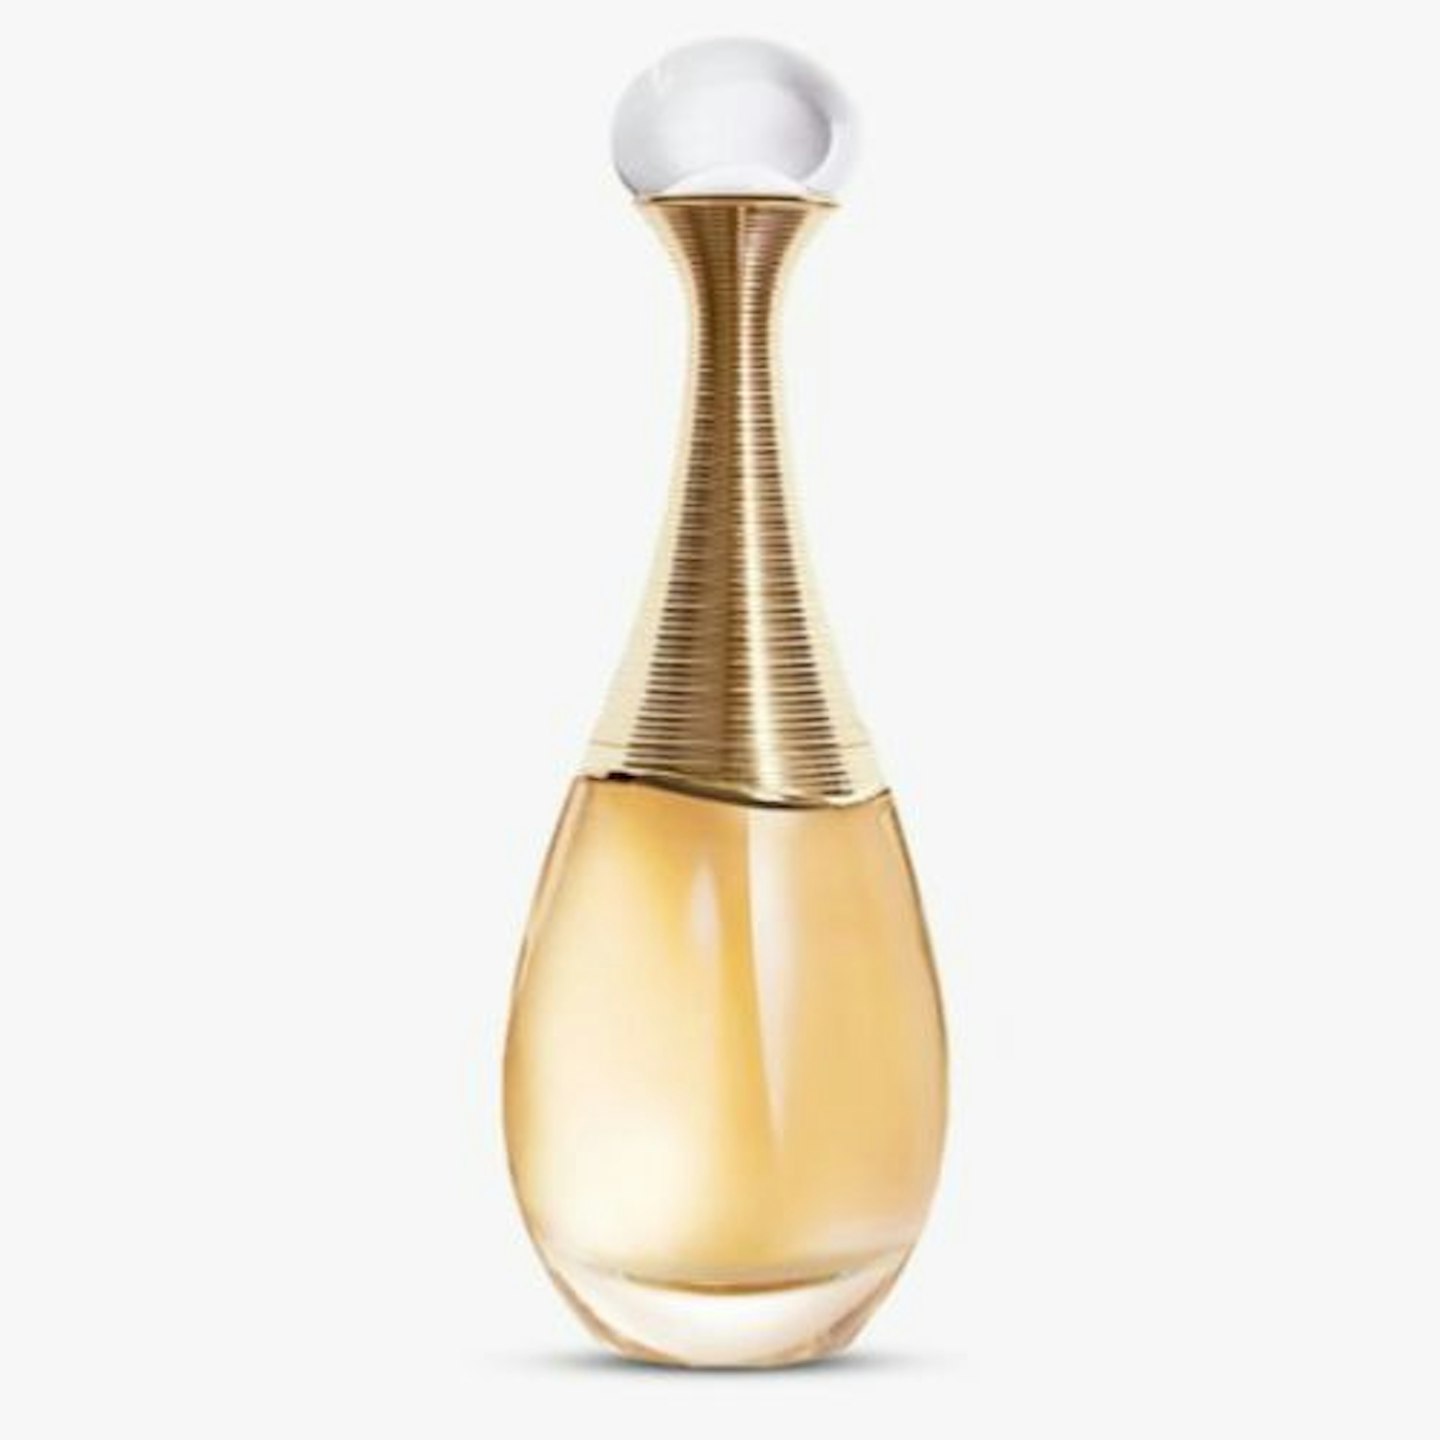 Brands Online - Dupe Alert! ZARA WOMAN WONDER ROSE 100ML PKR 5,350/-  #zaraperfume #womenperfume #fragrance #zara #brandsfromuk #perfume  #womenwear #smellsalike